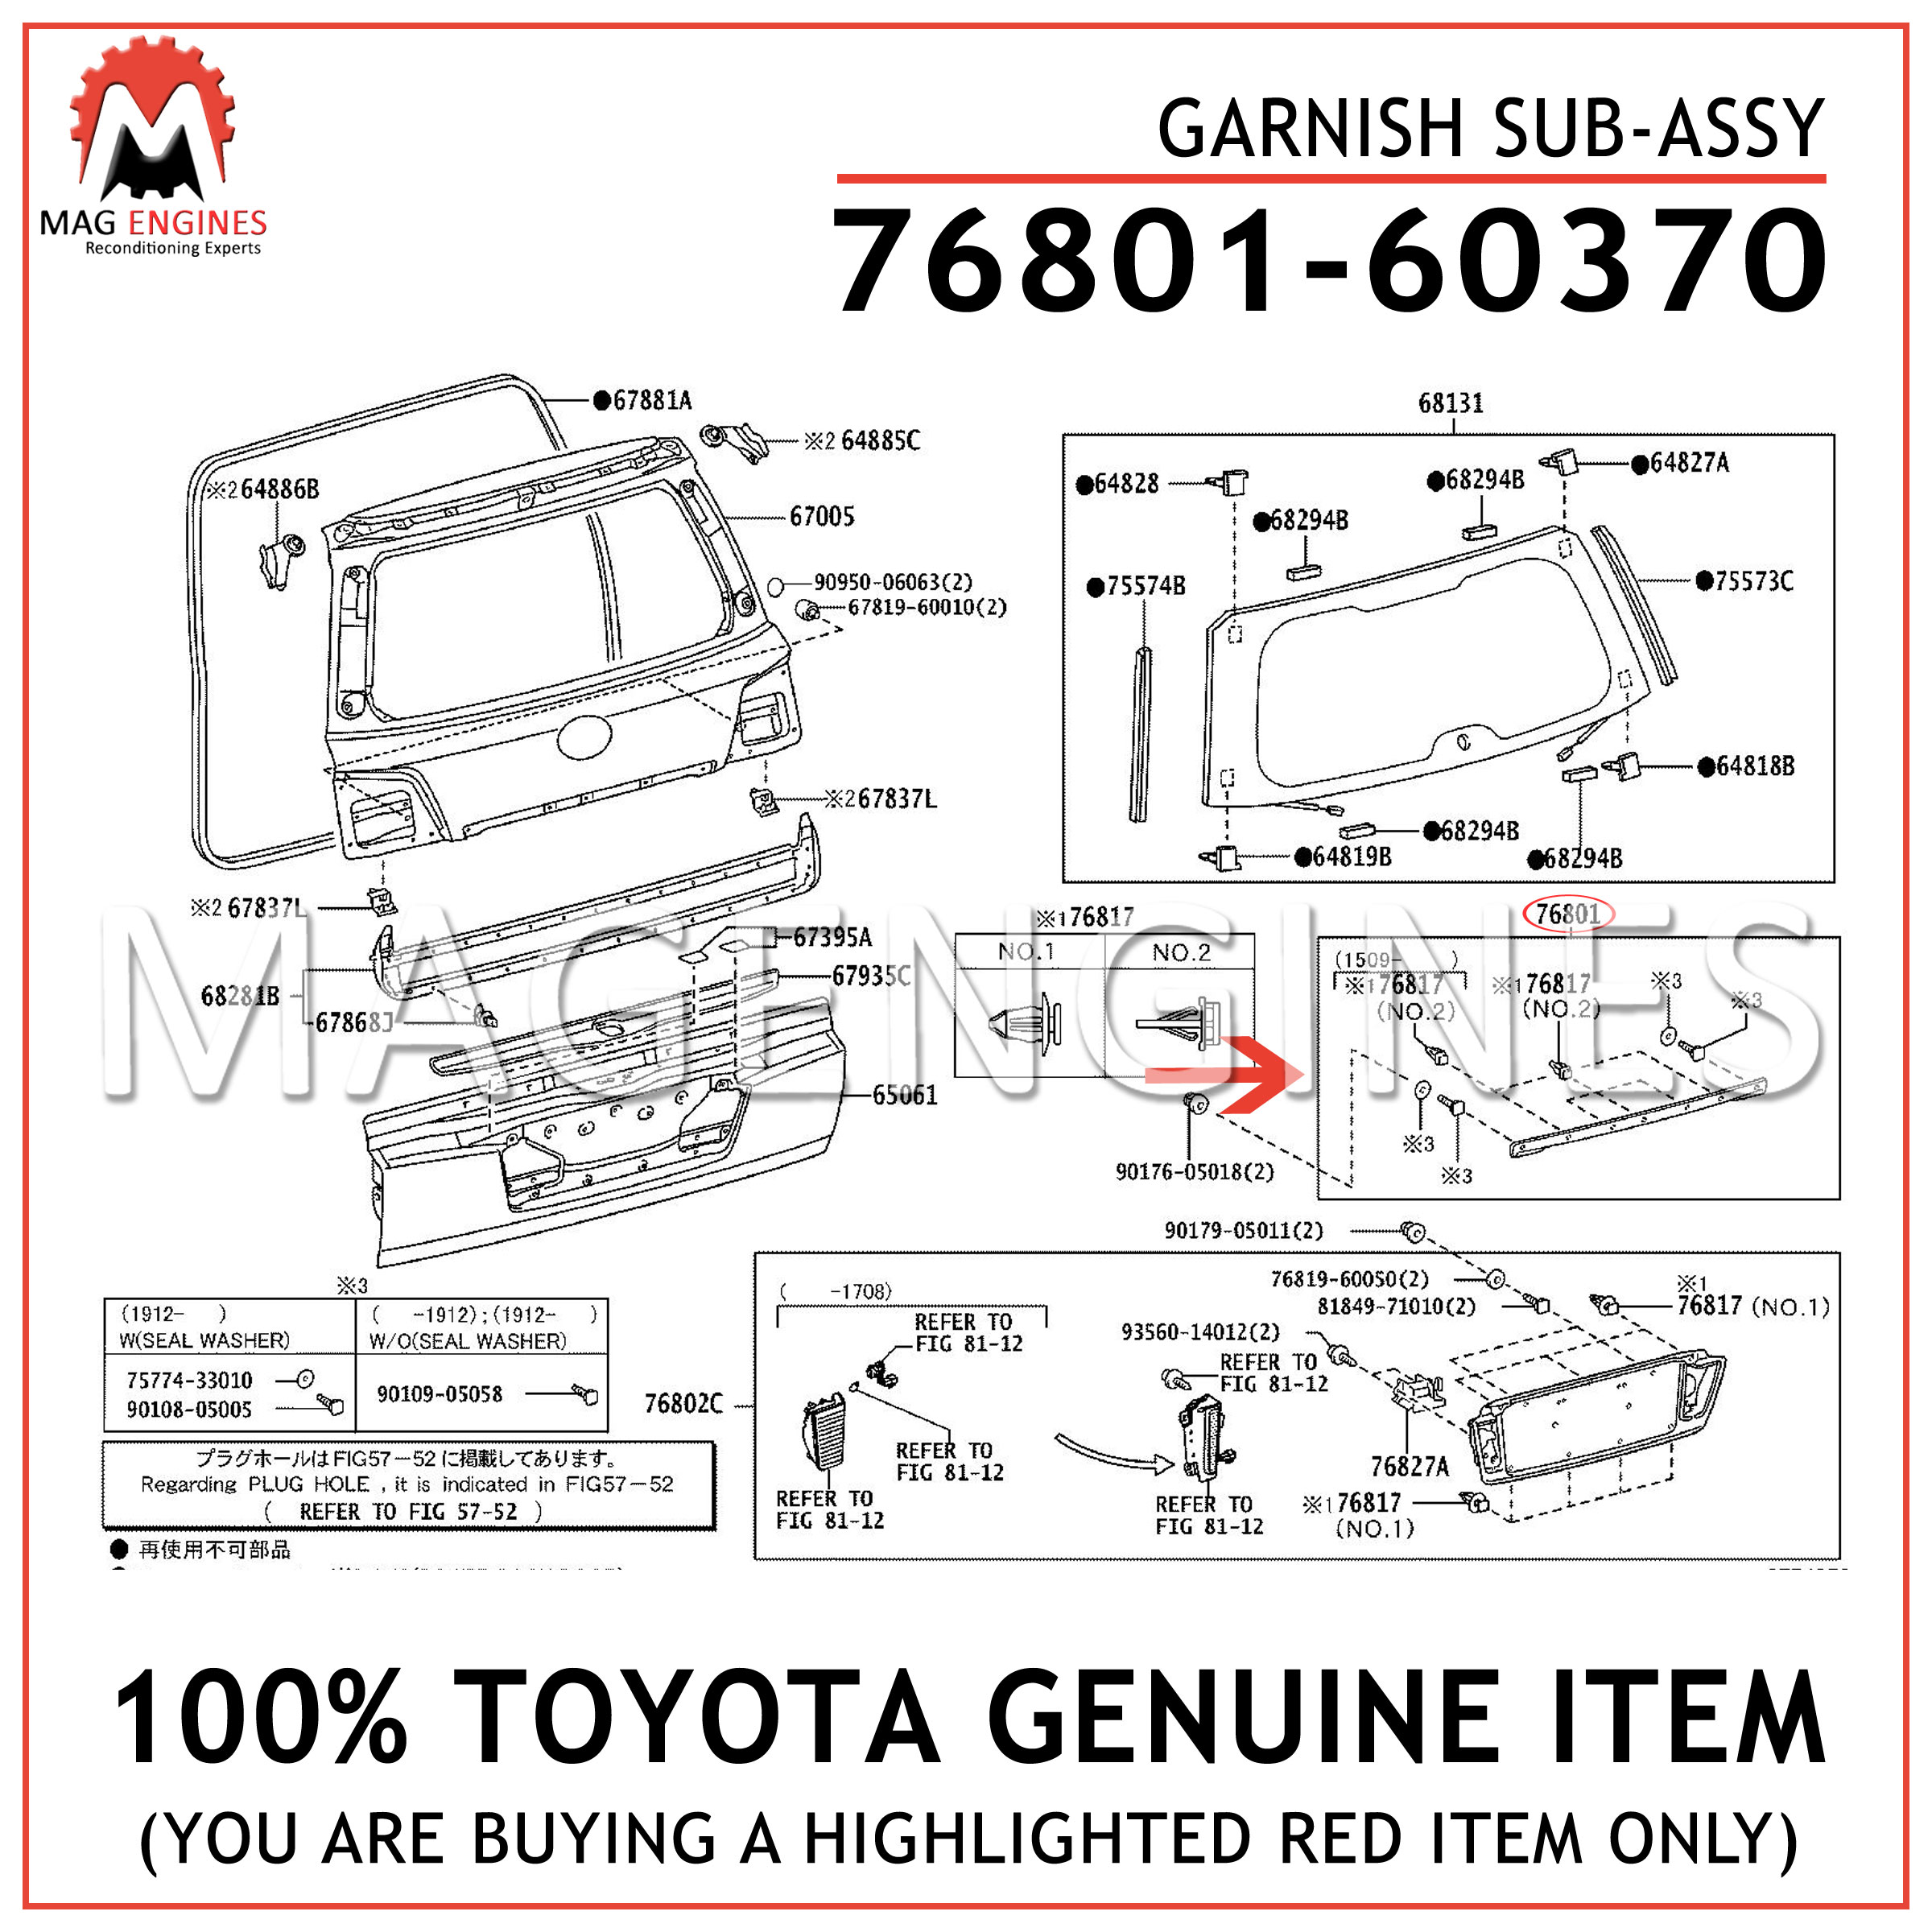 7680160400 Genuine Toyota GARNISH SUB-ASSY 76801-60400